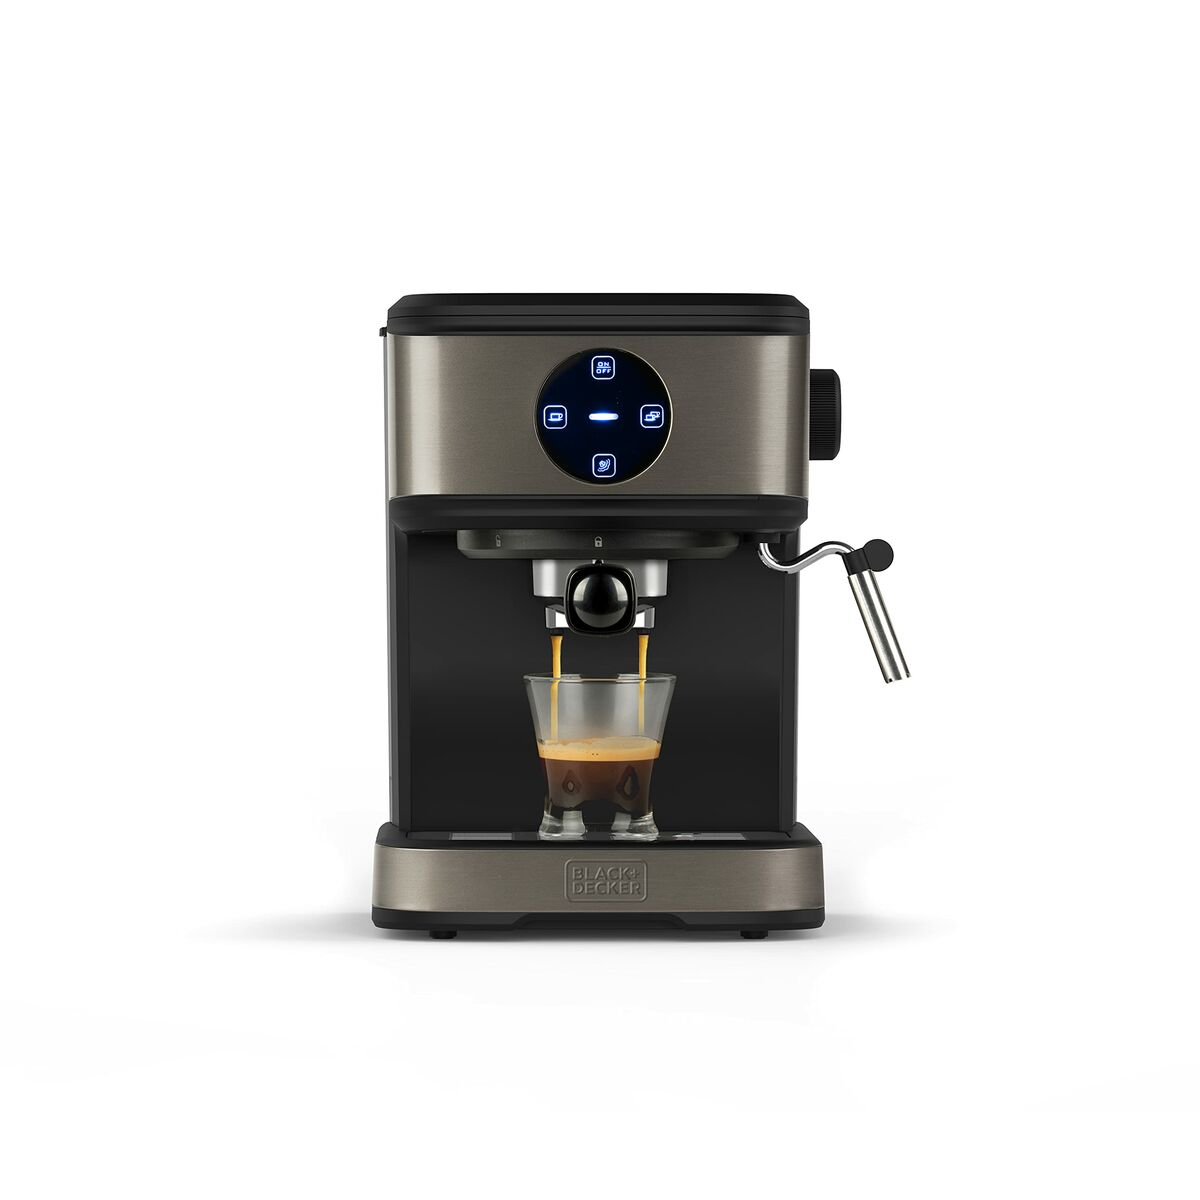 Superautomatische Kaffeemaschine Black & Decker BXCO850E Schwarz Silberfarben 850 W 20 bar 1,2 L 2 Kopper - CA International 